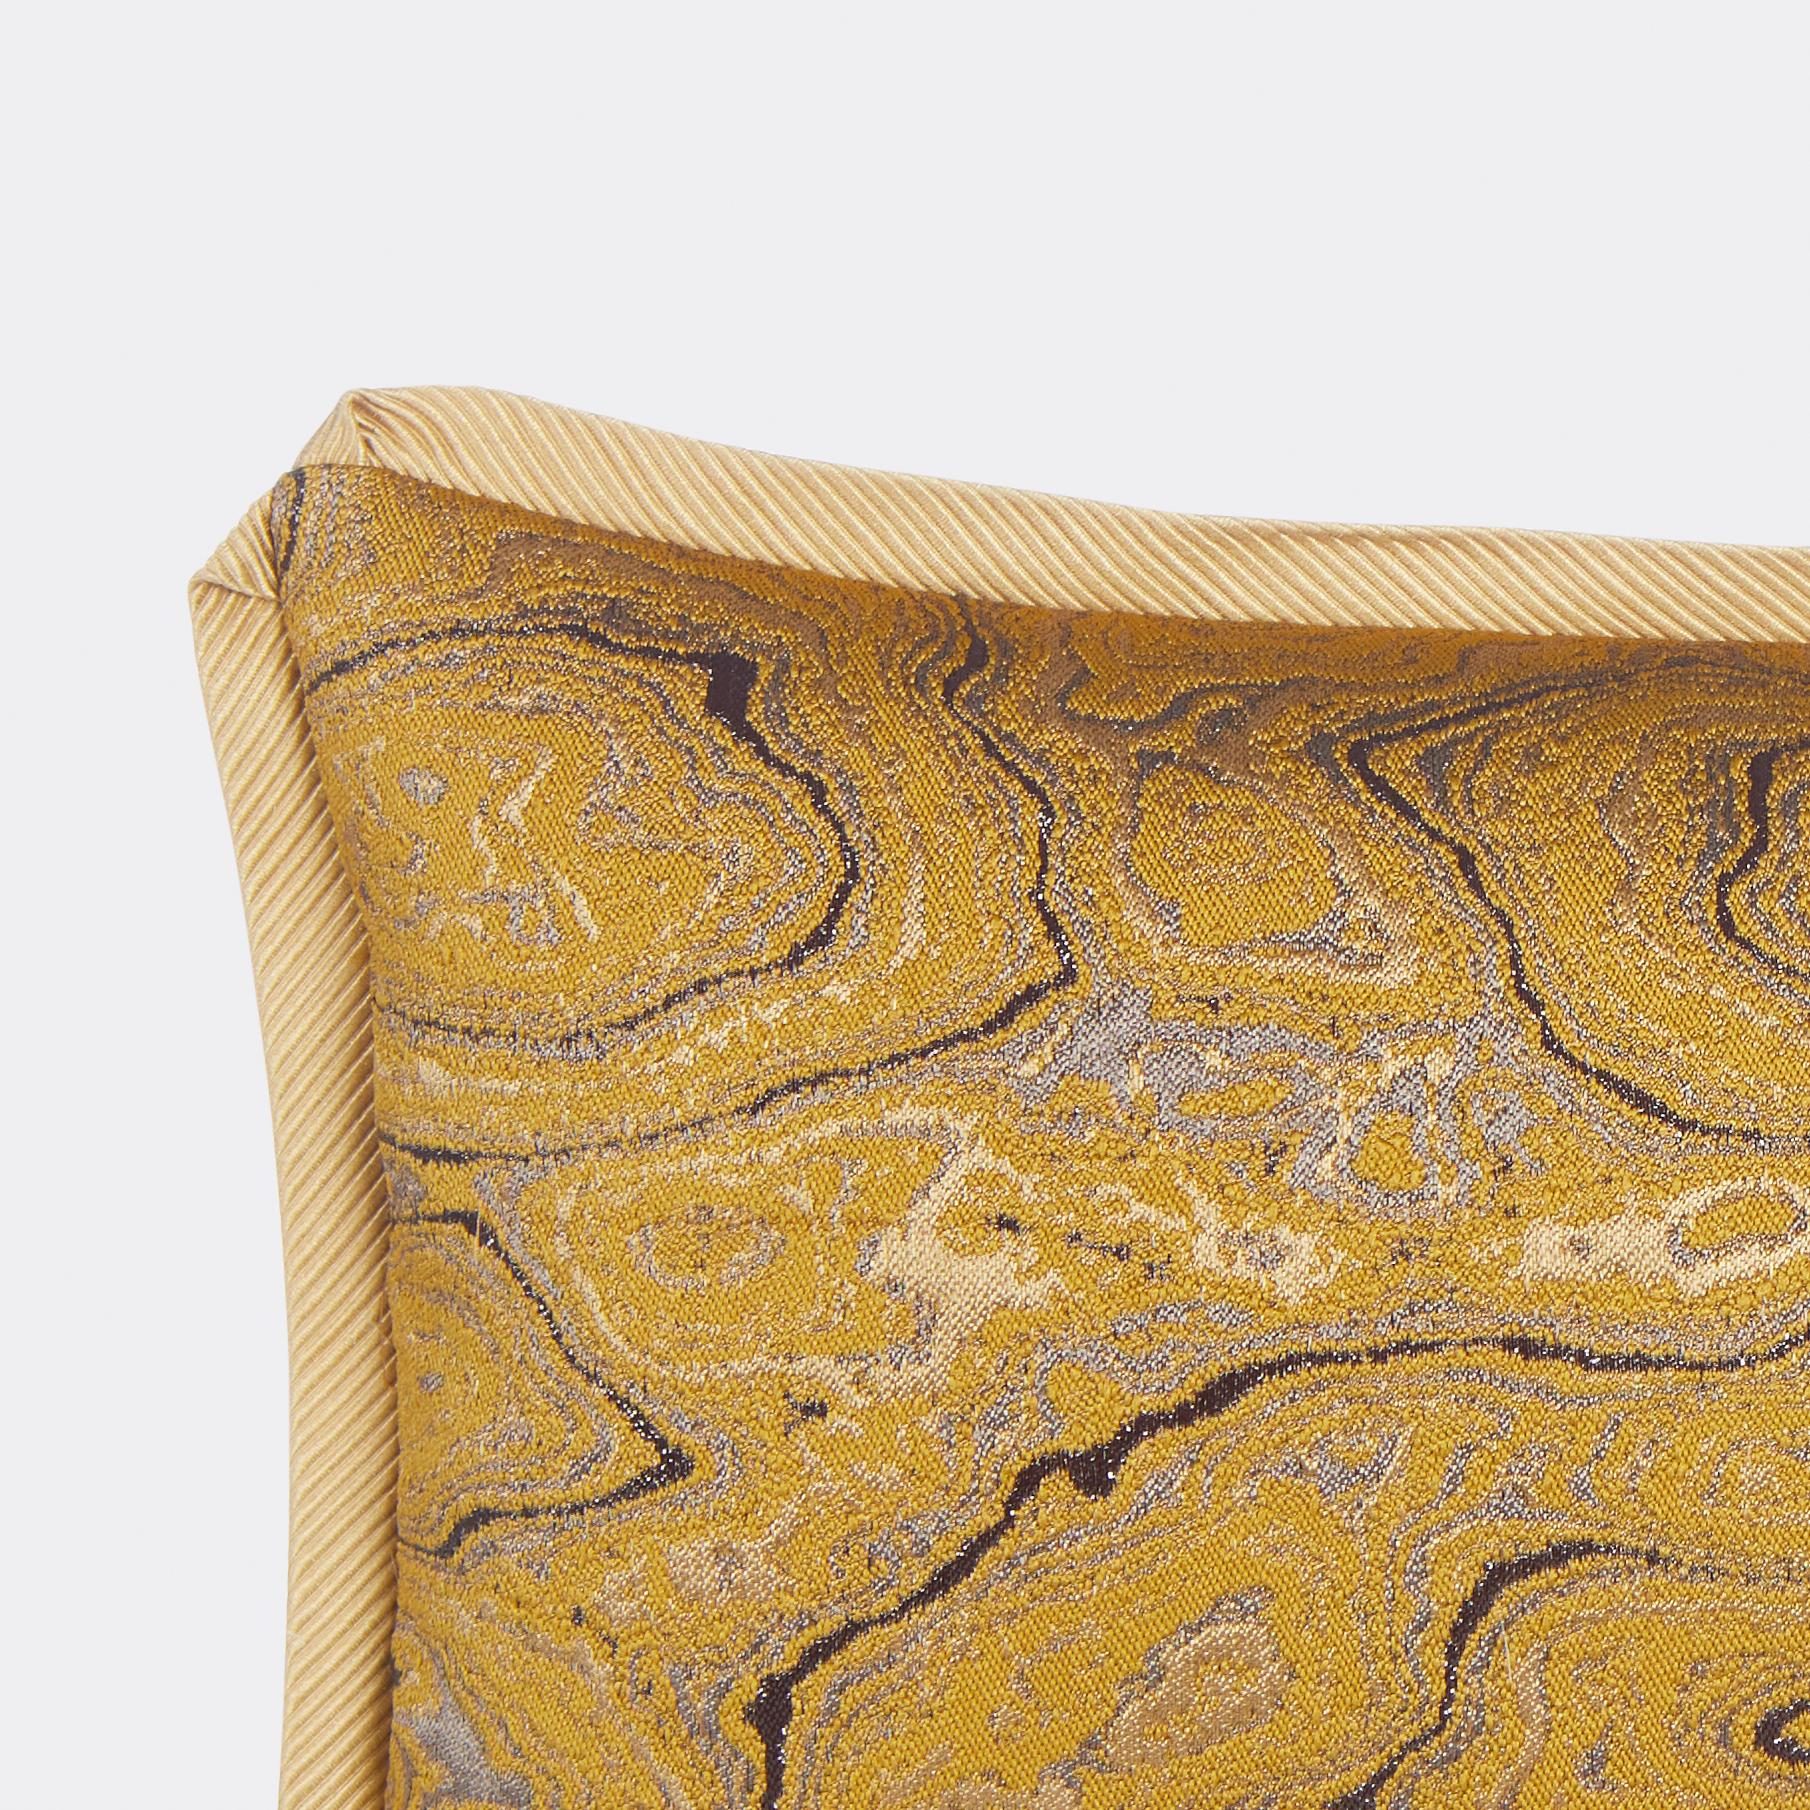 A Brocaded silk with metallic thread Dries Van Noten Fabric cushion.